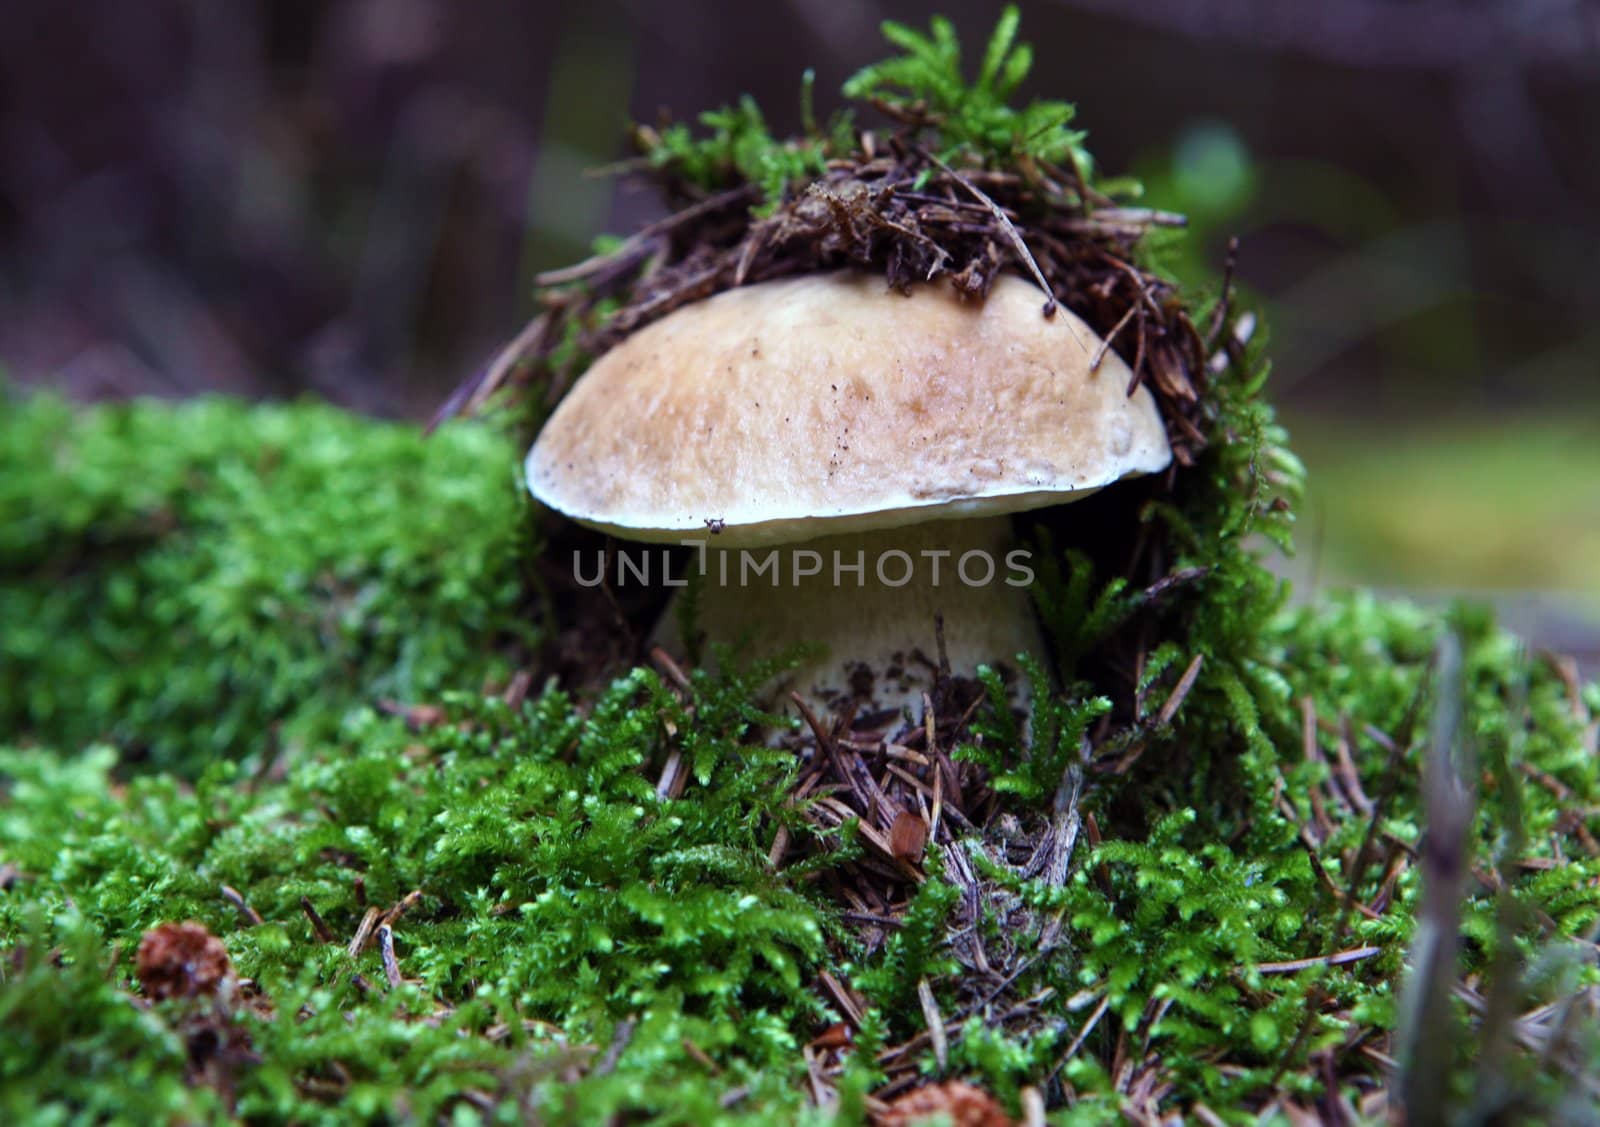 Mushrooms growing in forest by haak78